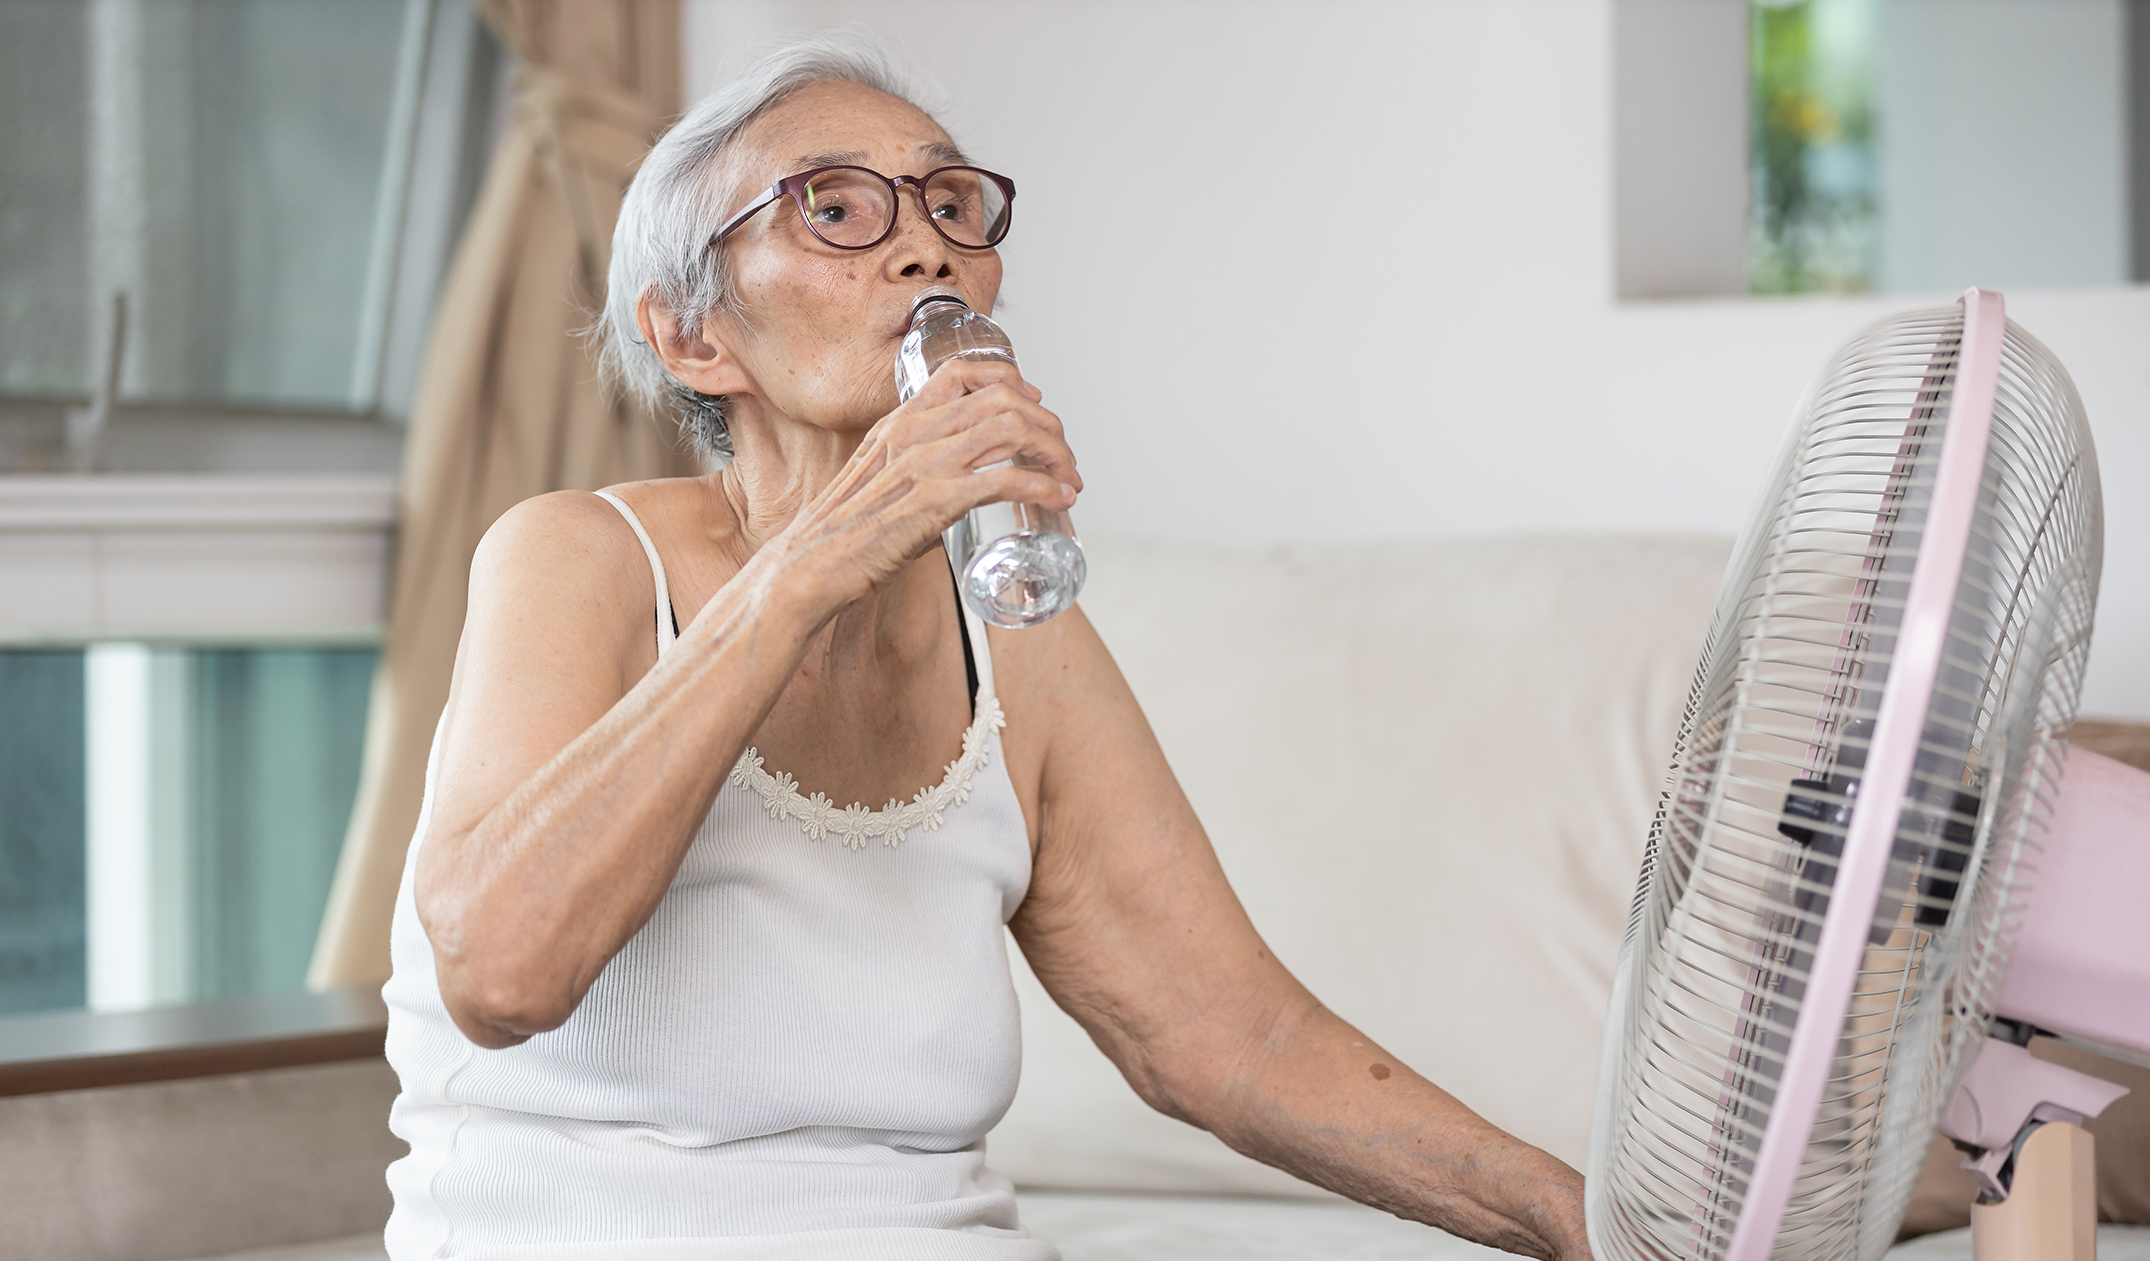 Five reasons to look after elderly neighbours in heatwaves